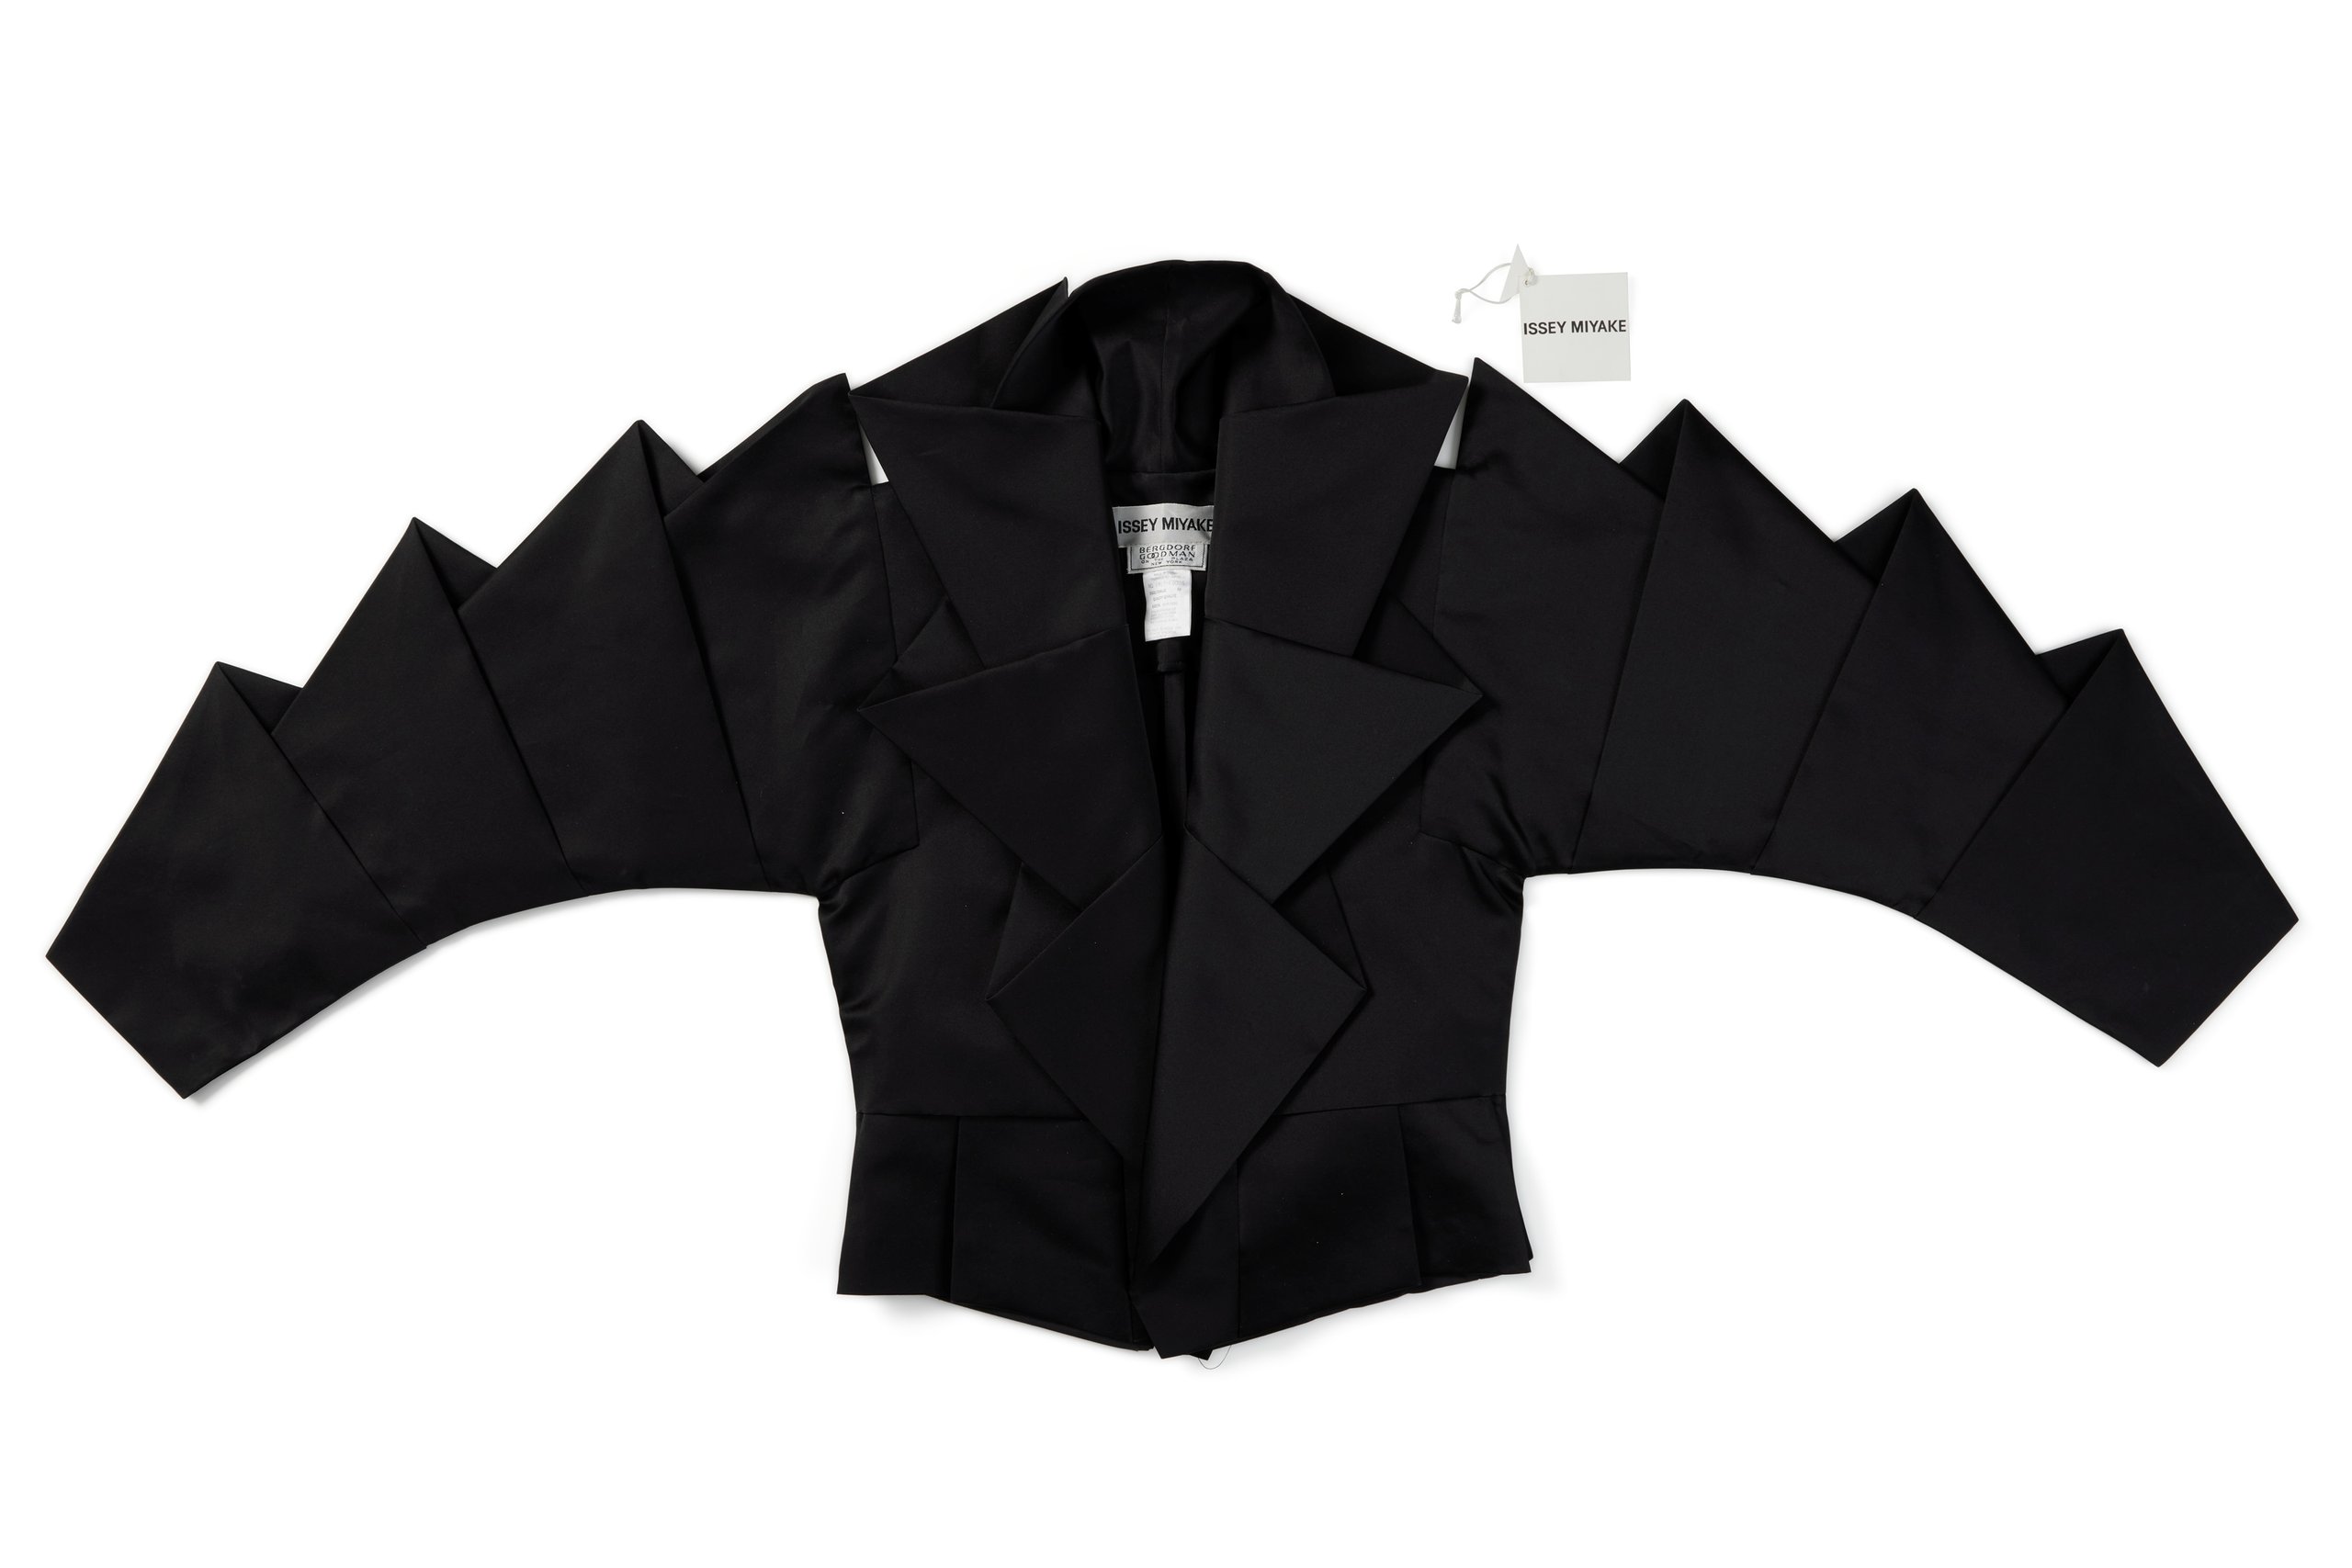 'Dinosaur' jacket by Issey Miyake Inc